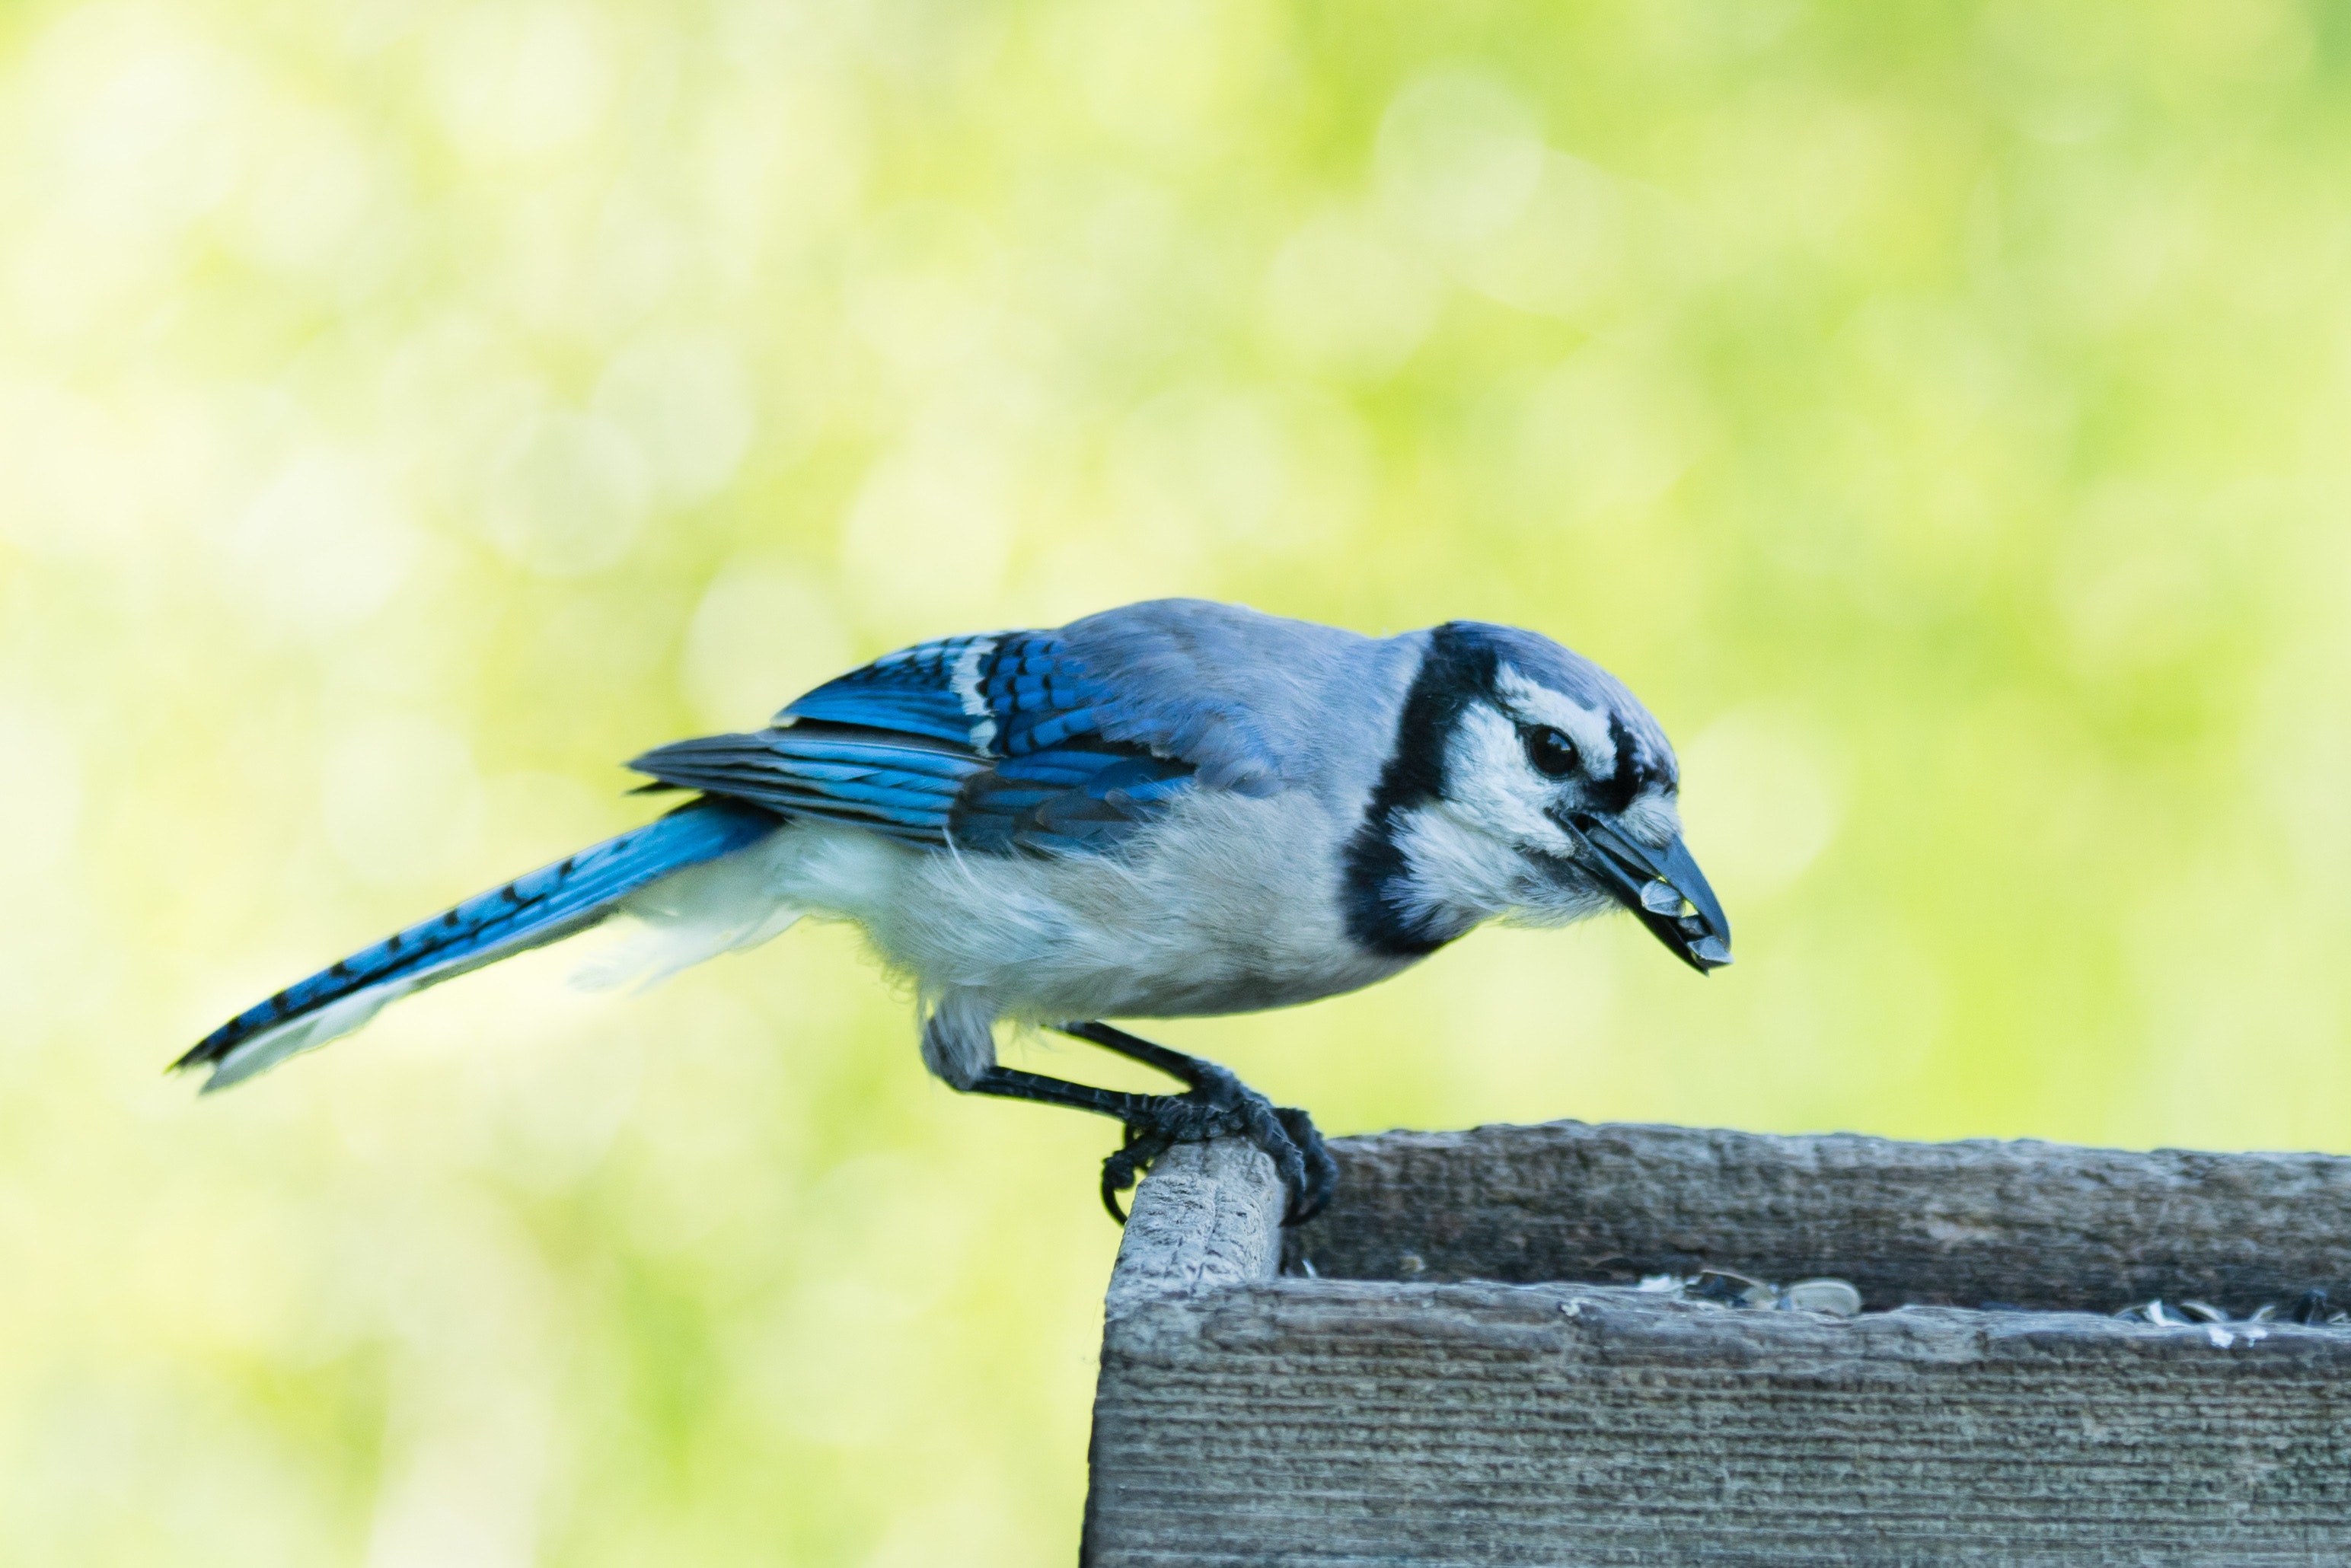 SEWE Wild Birds Unlimited bluebirds